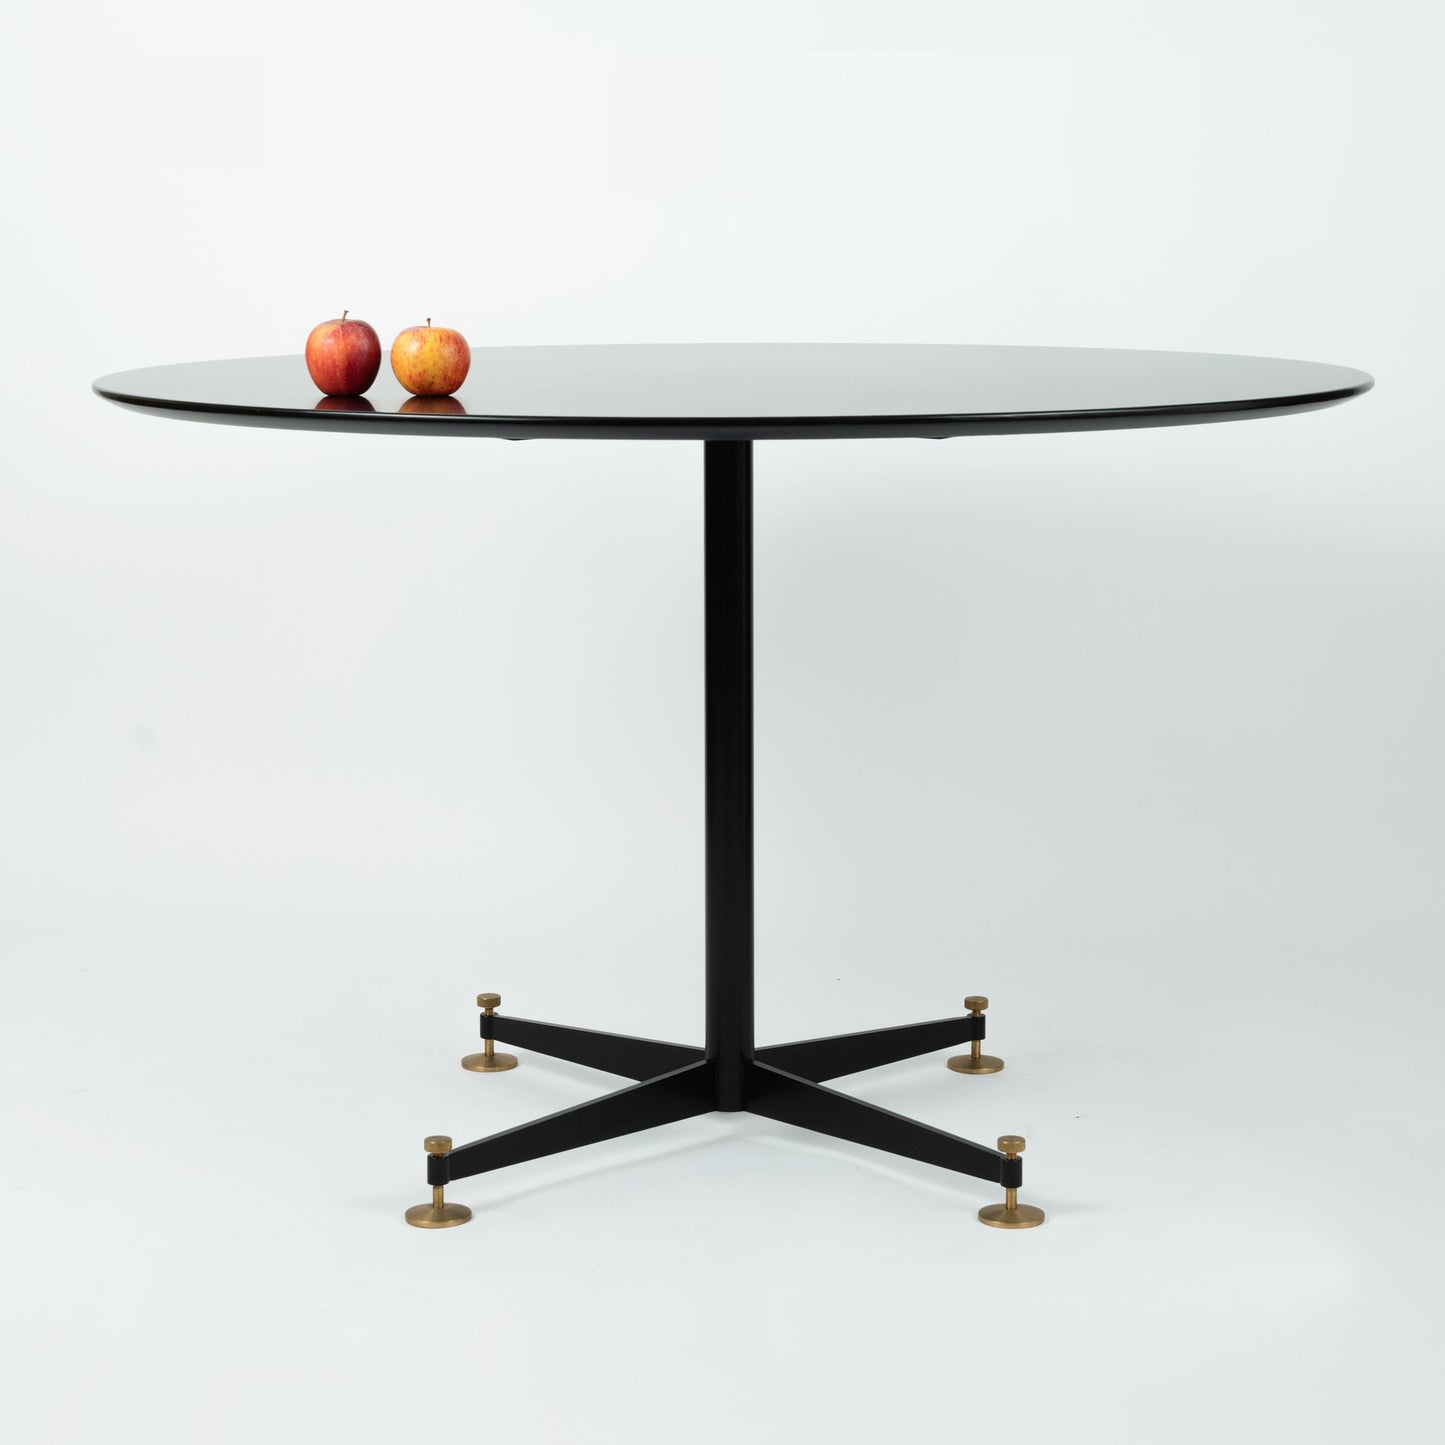 Gio round dining table